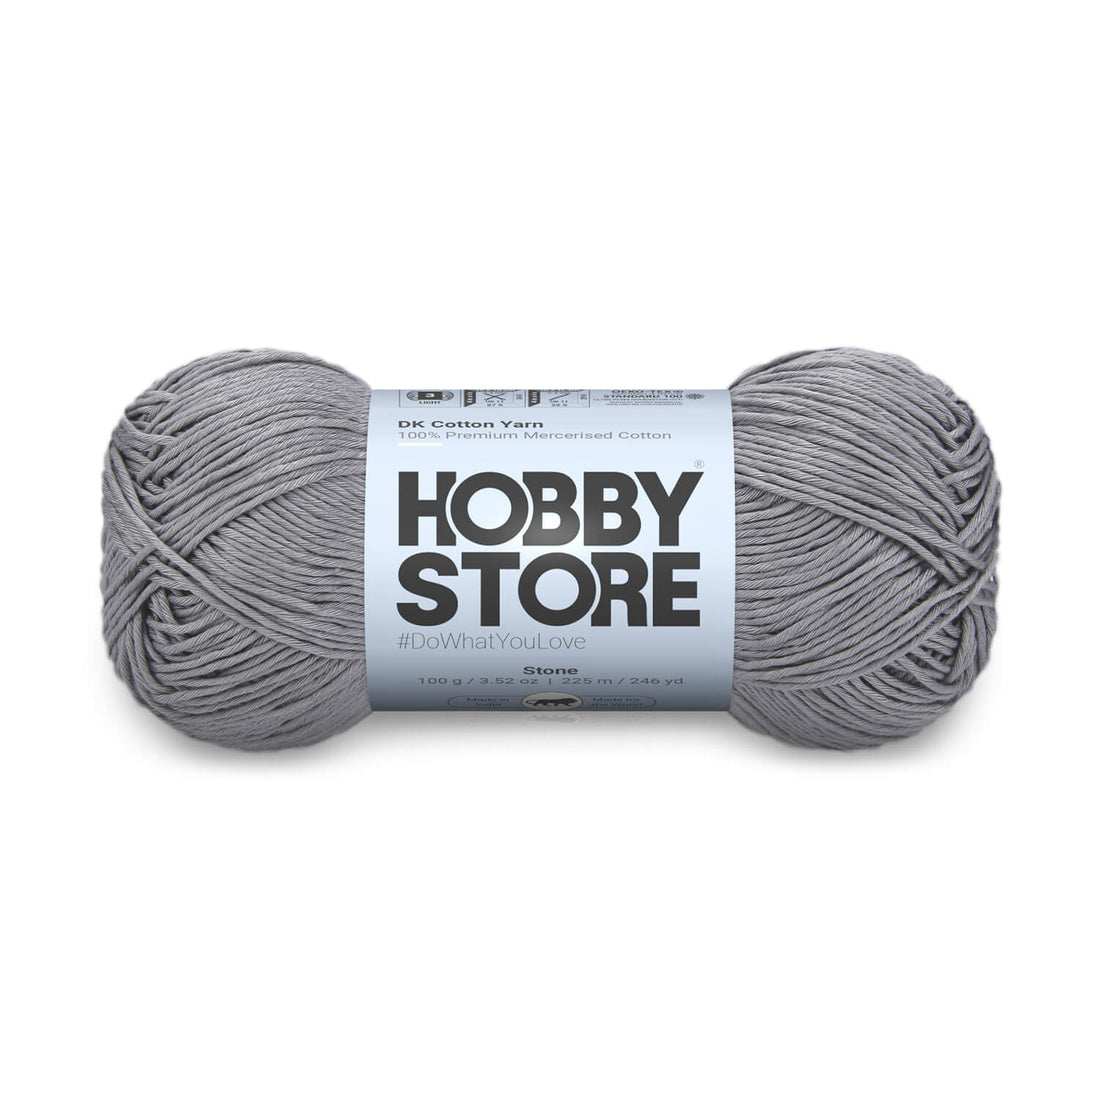 DK Mercerised Cotton Yarn by Hobby Store - Stone - 345